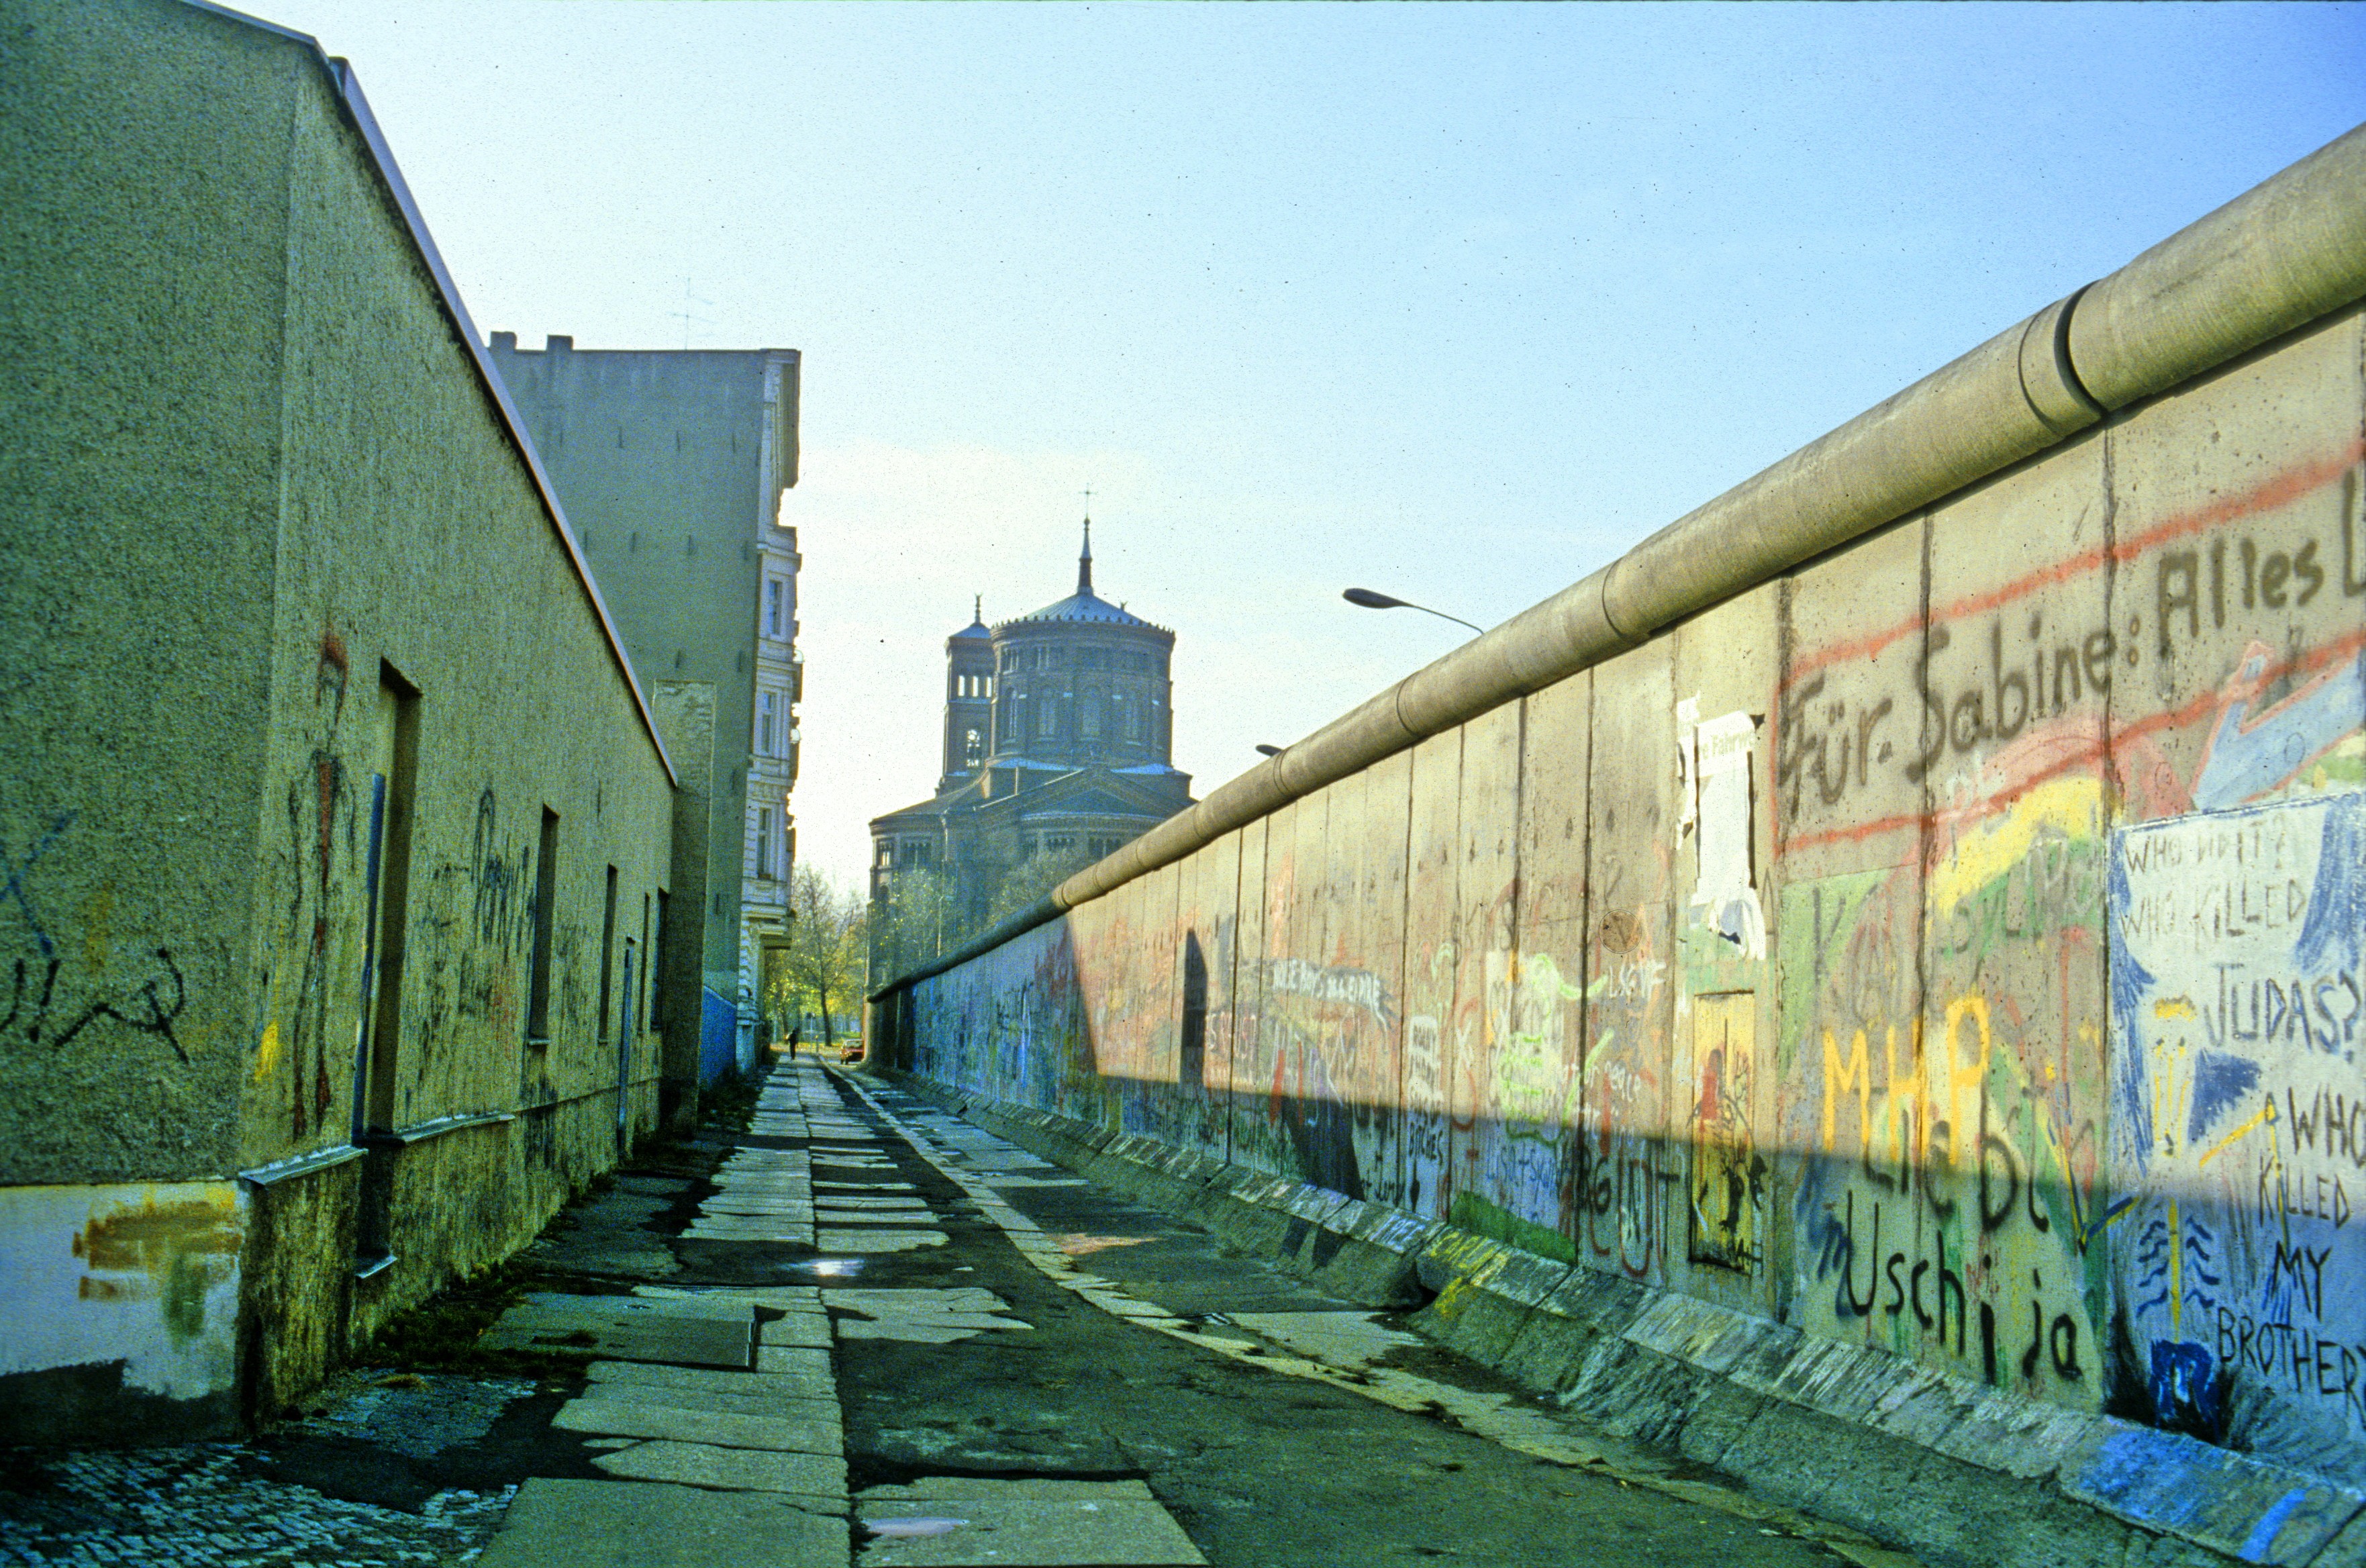 Berlin, Cold War, Berlin Wall, DDR, East Germany, GDR, Graffiti